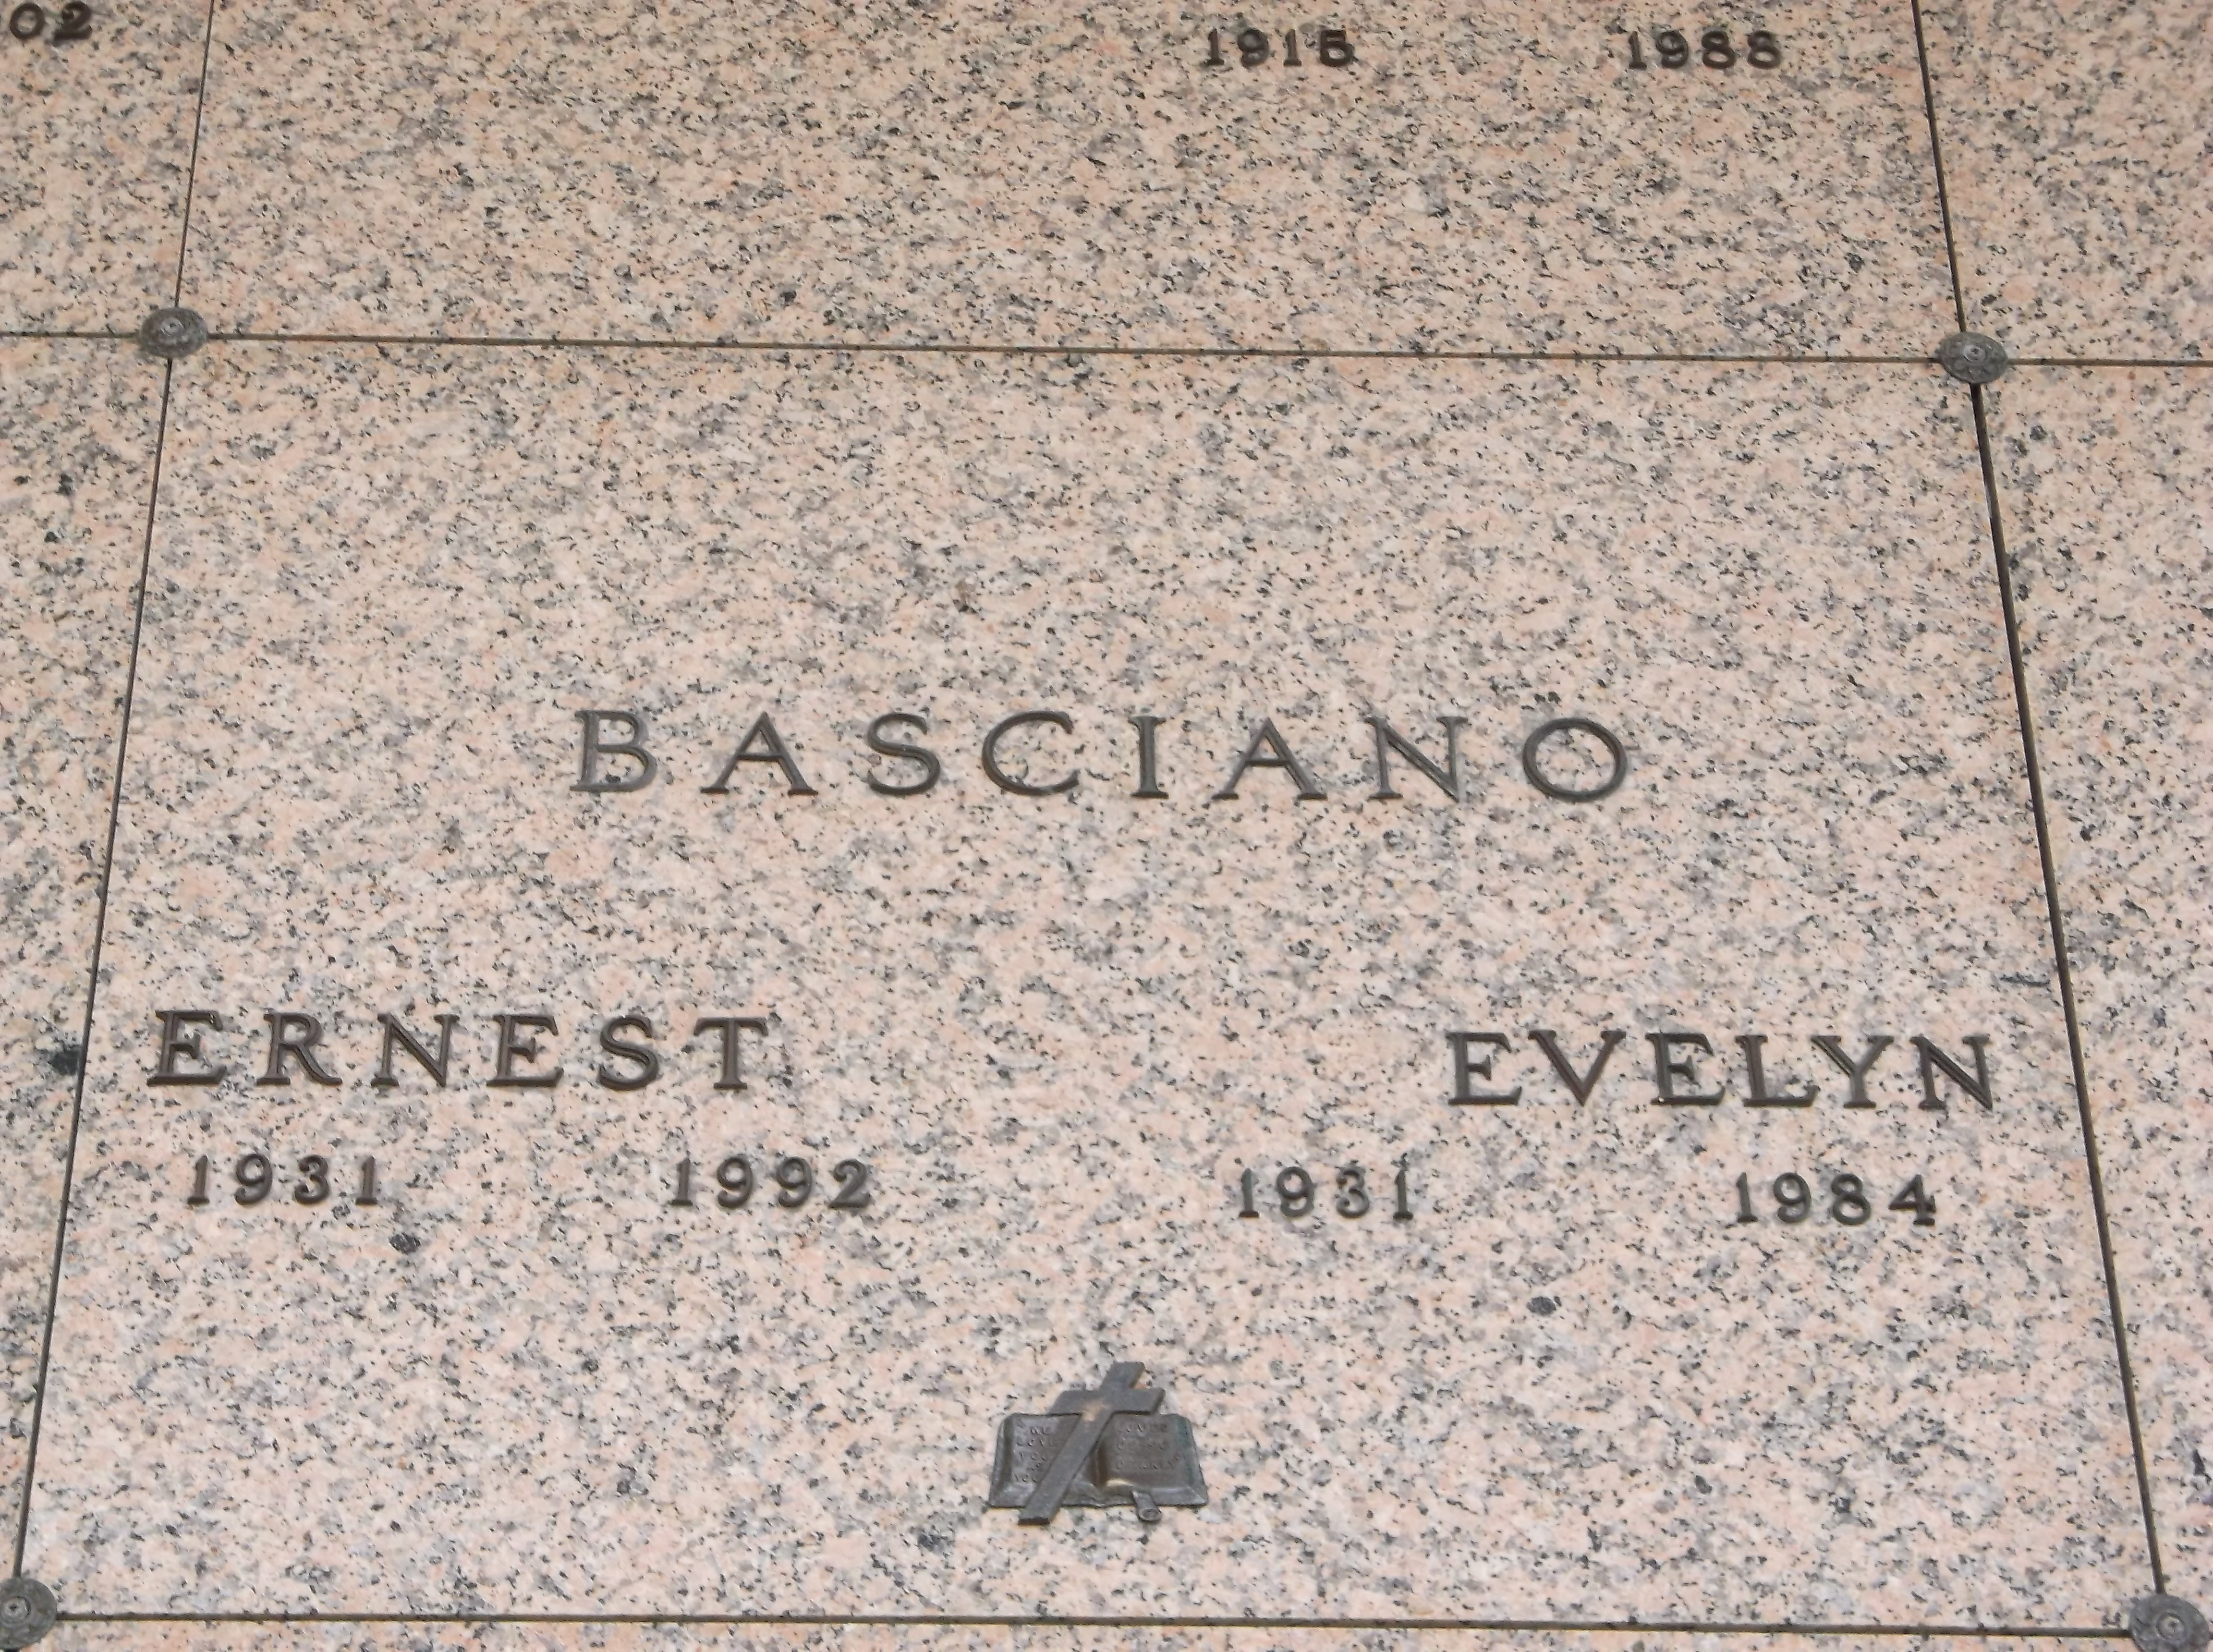 Ernest Basciano